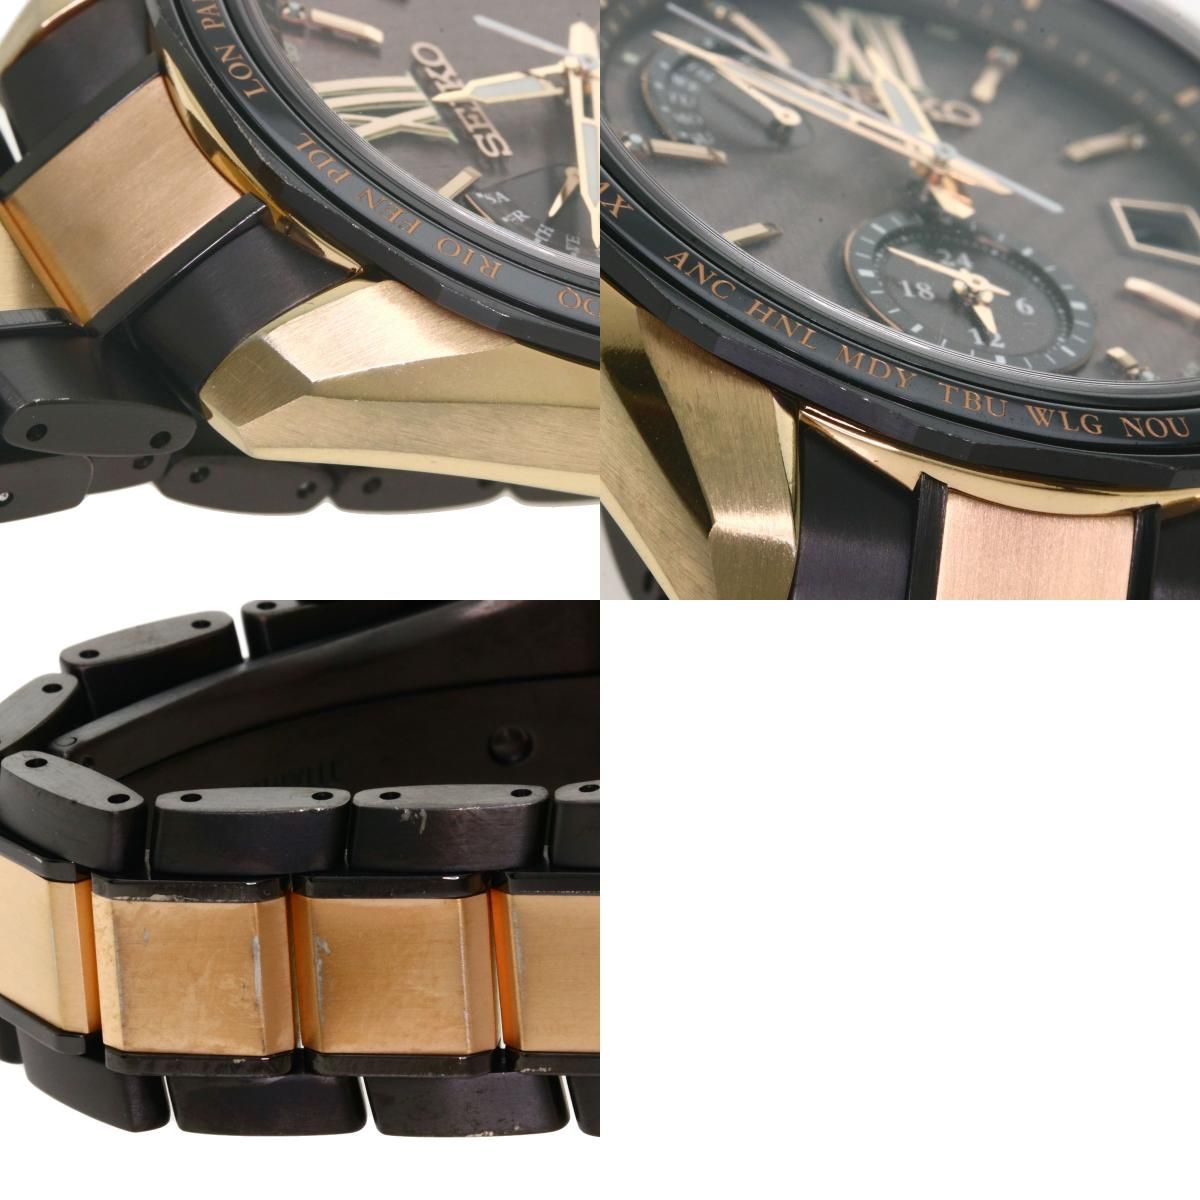 SEIKO SAGA270 8B63-0AR0 ブライツ 2019年限定モデル 腕時計 チタンセラミック チタンセラミック メンズ